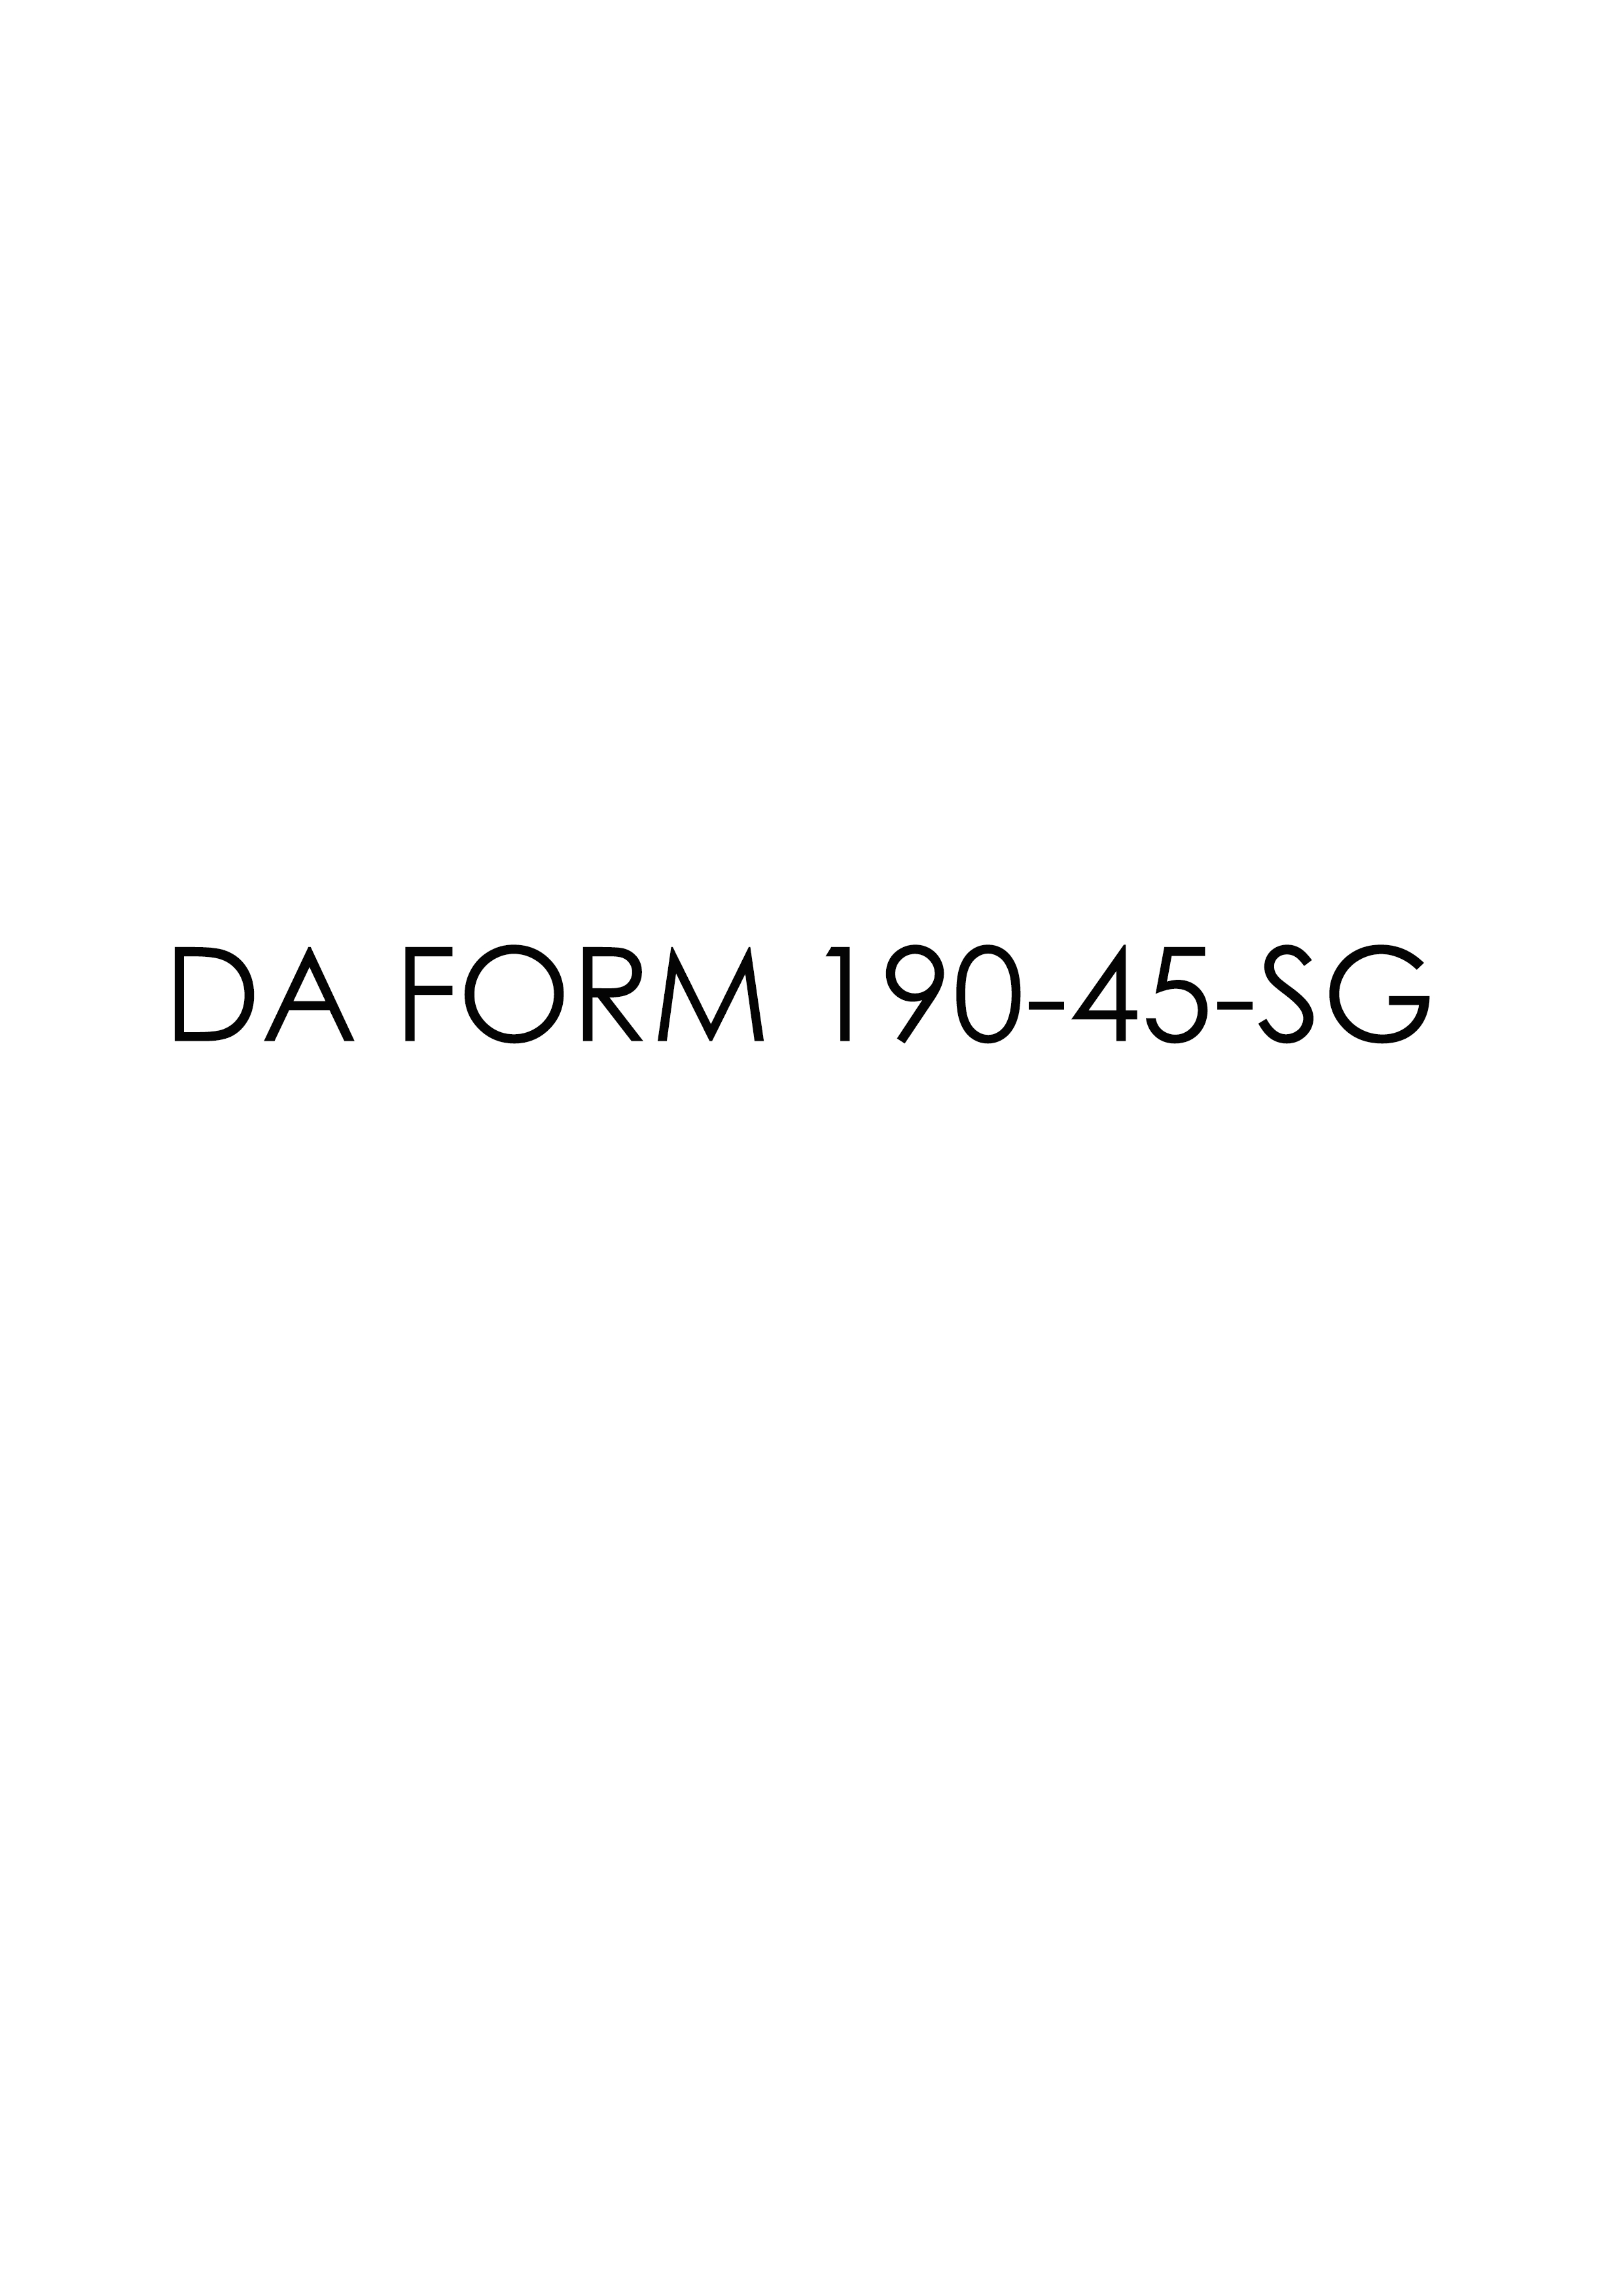 Download da Form 190-45-SG